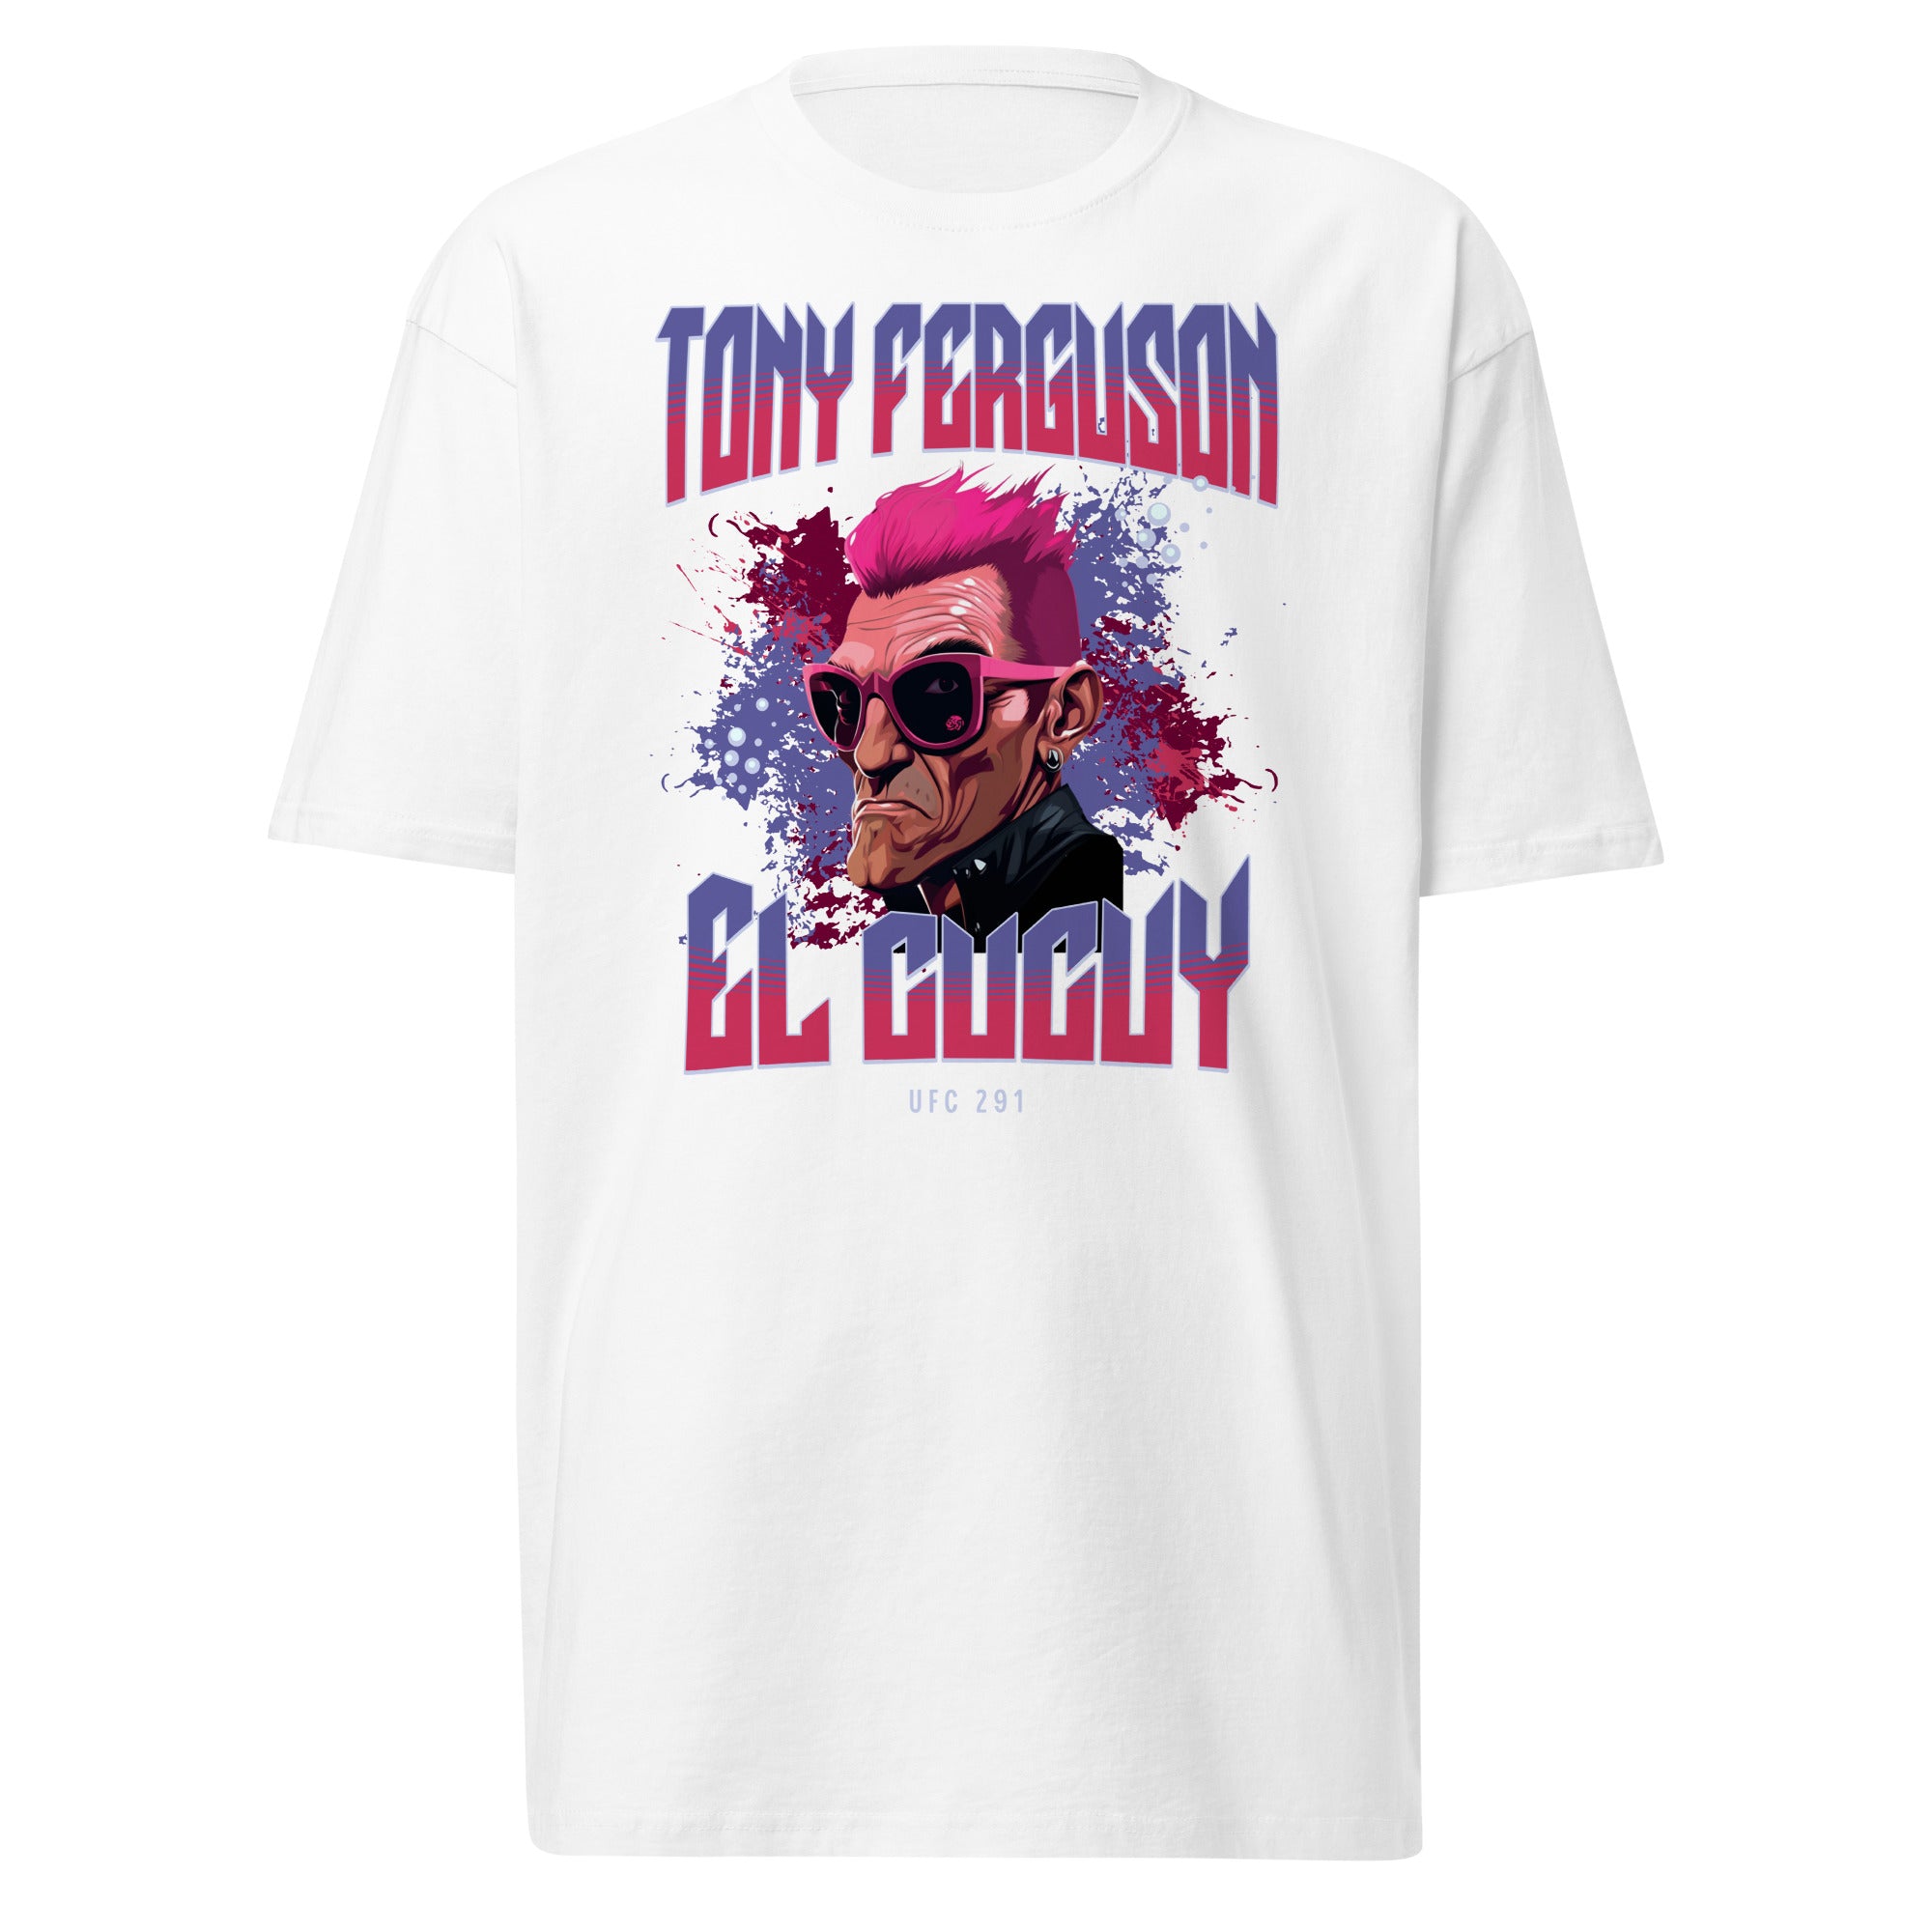 Tony "El Cucy" Ferguson Premium Heavyweight T-Shirt